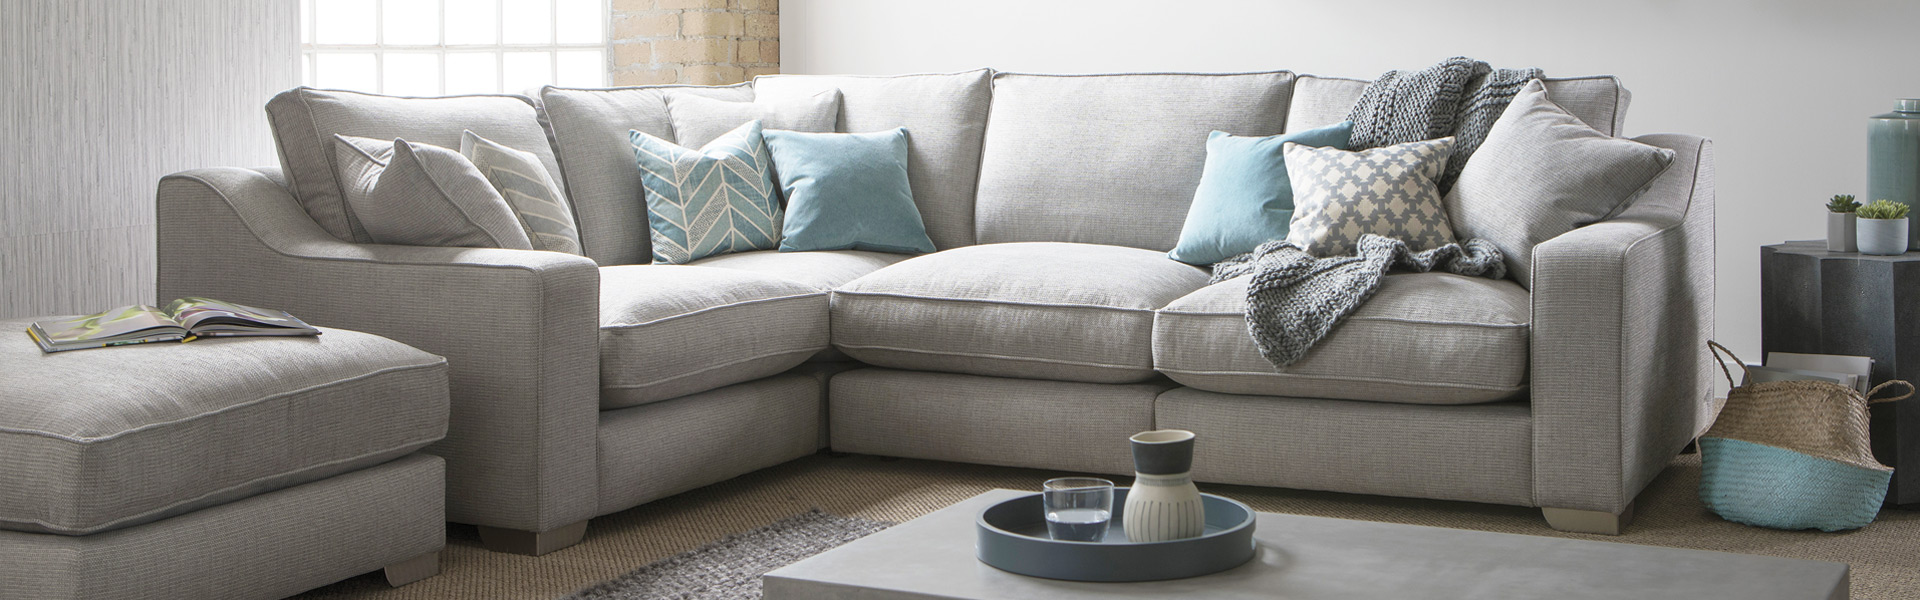 Know the ways to buy sofas